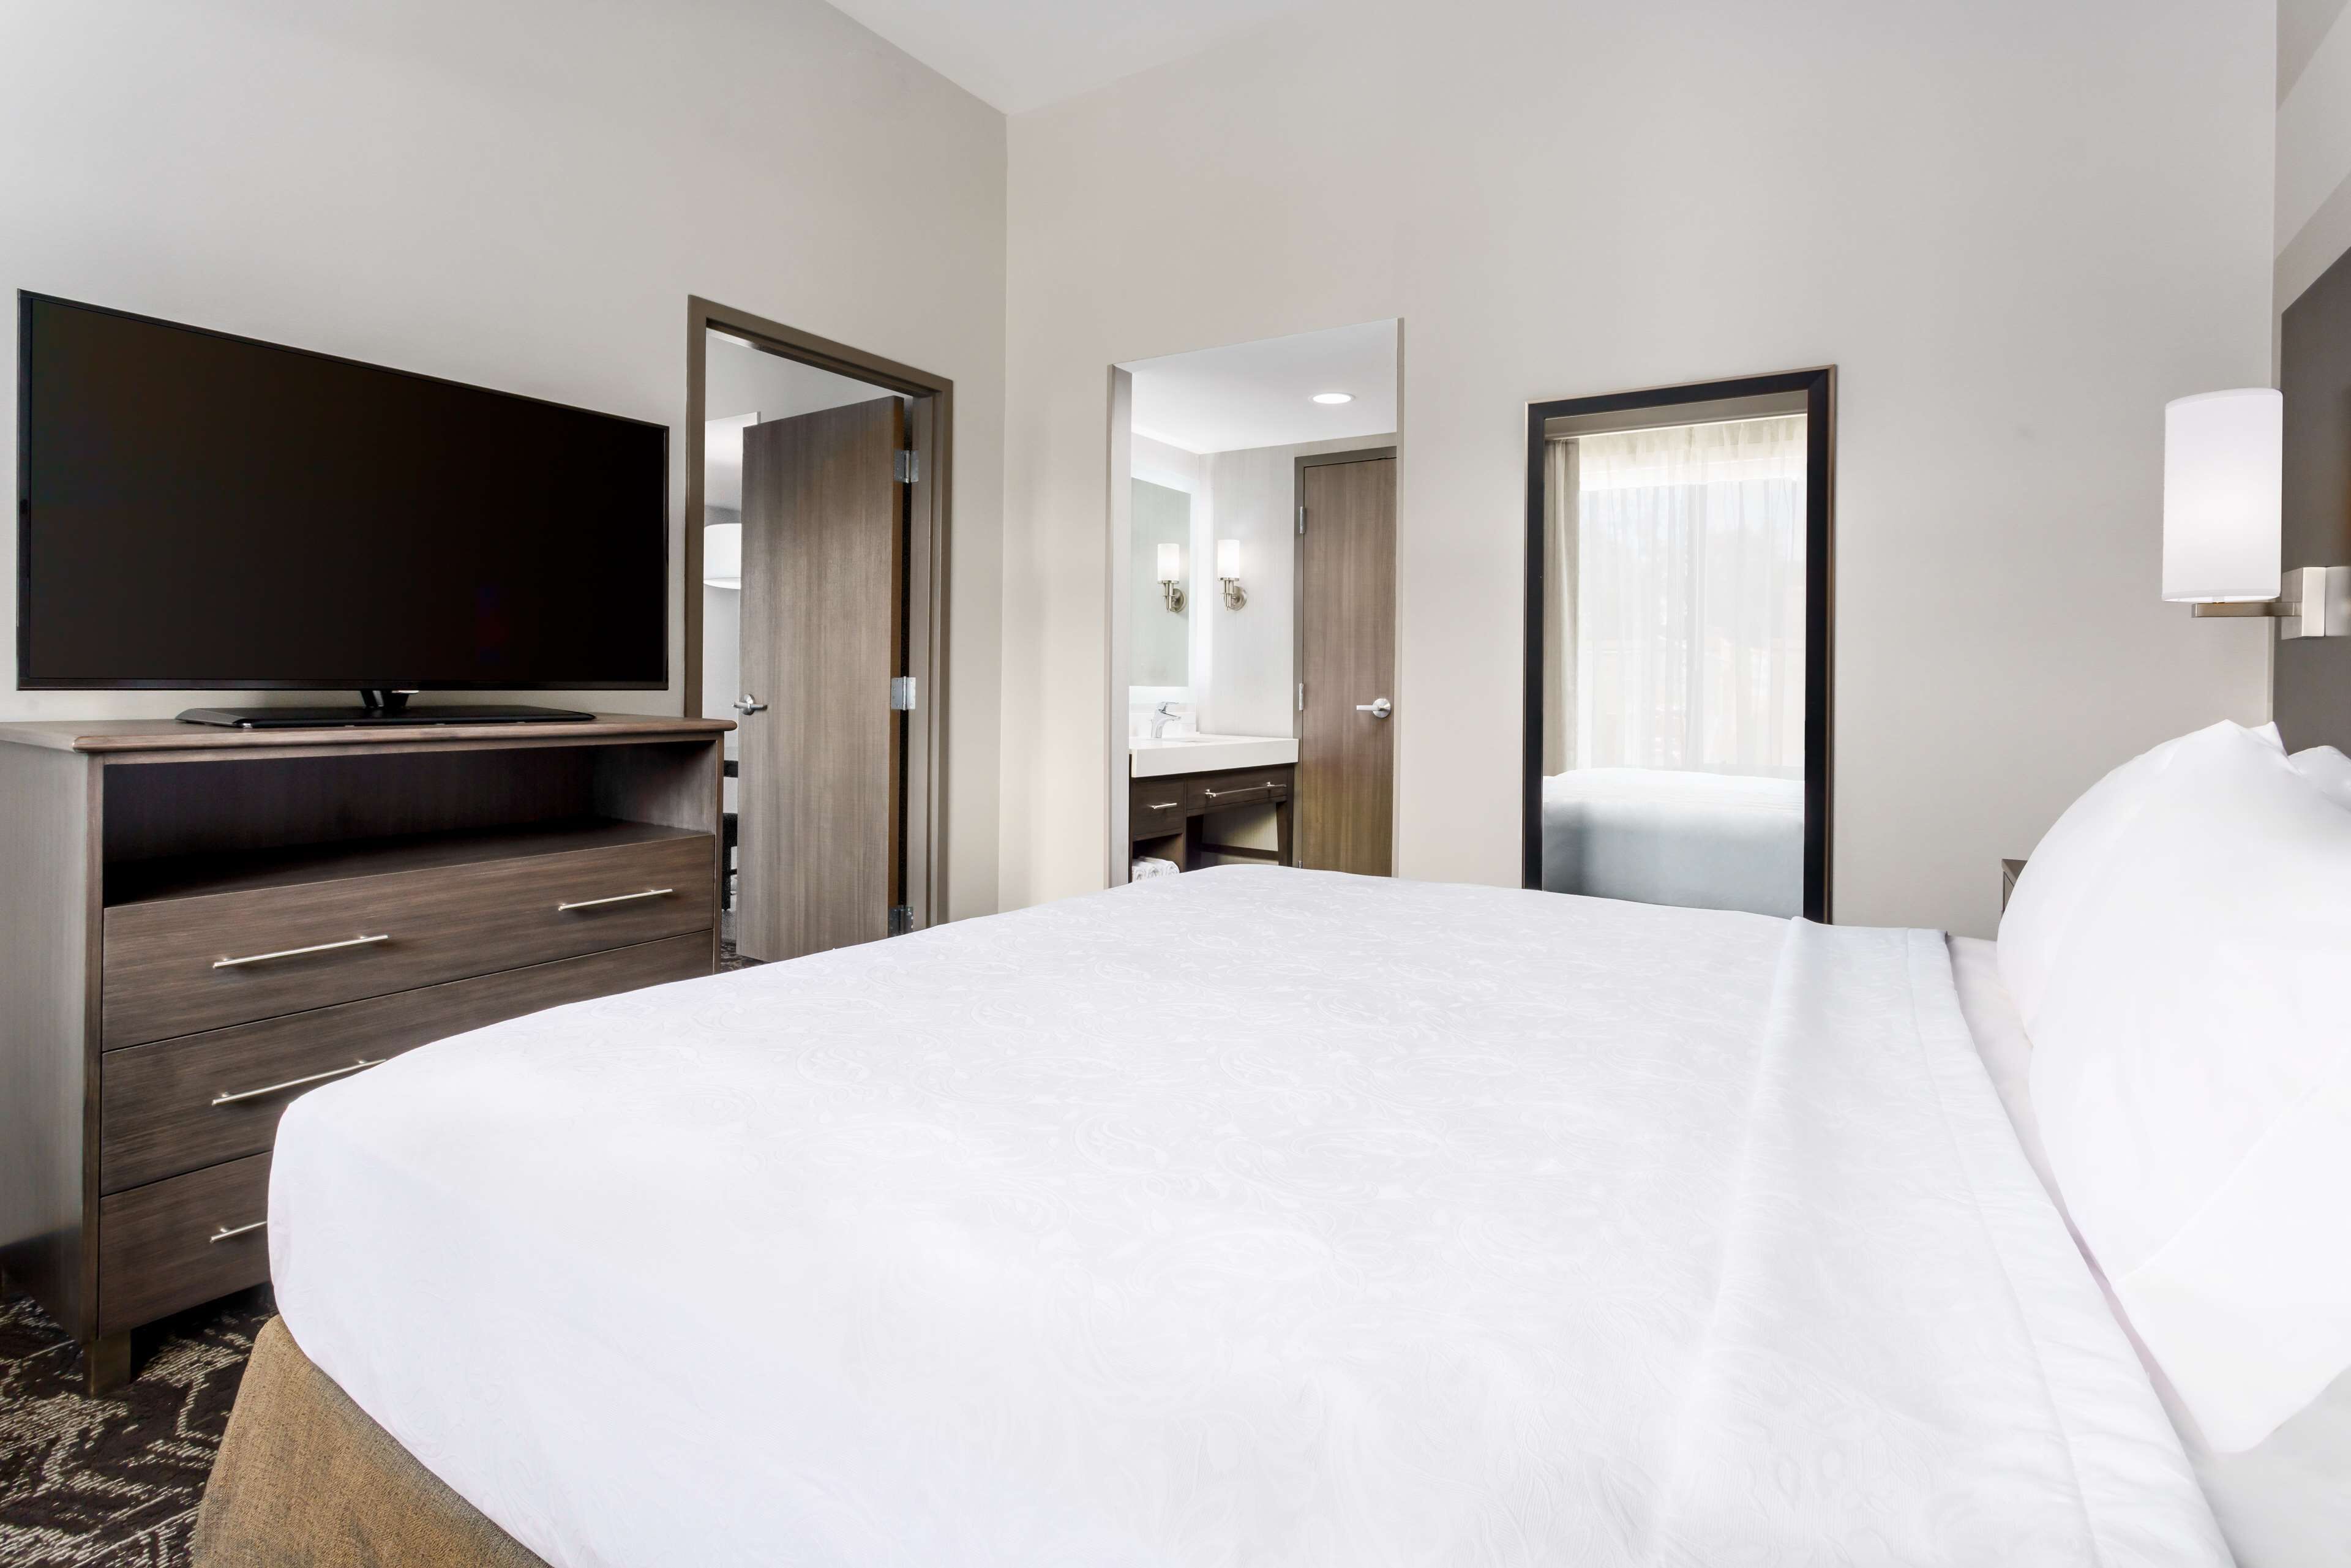 Homewood Suites by Hilton San Jose North